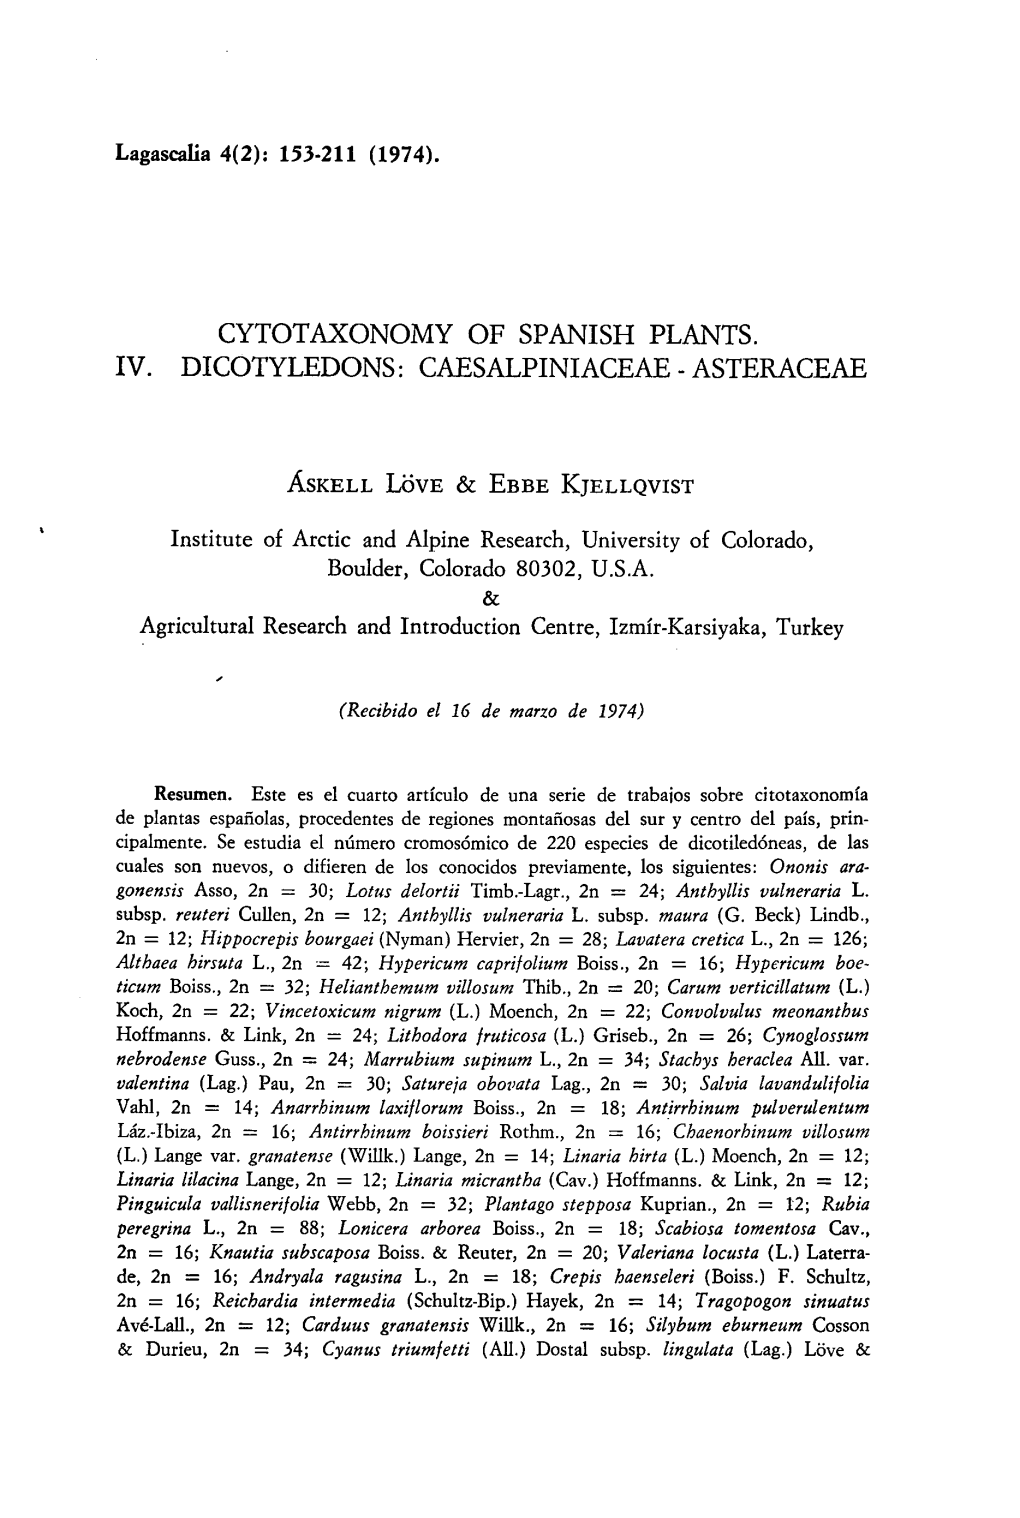 Cytotaxonomy of Spanish Plants. Iv. Dicotyledons: Caesalpiniaceae - Asteraceae